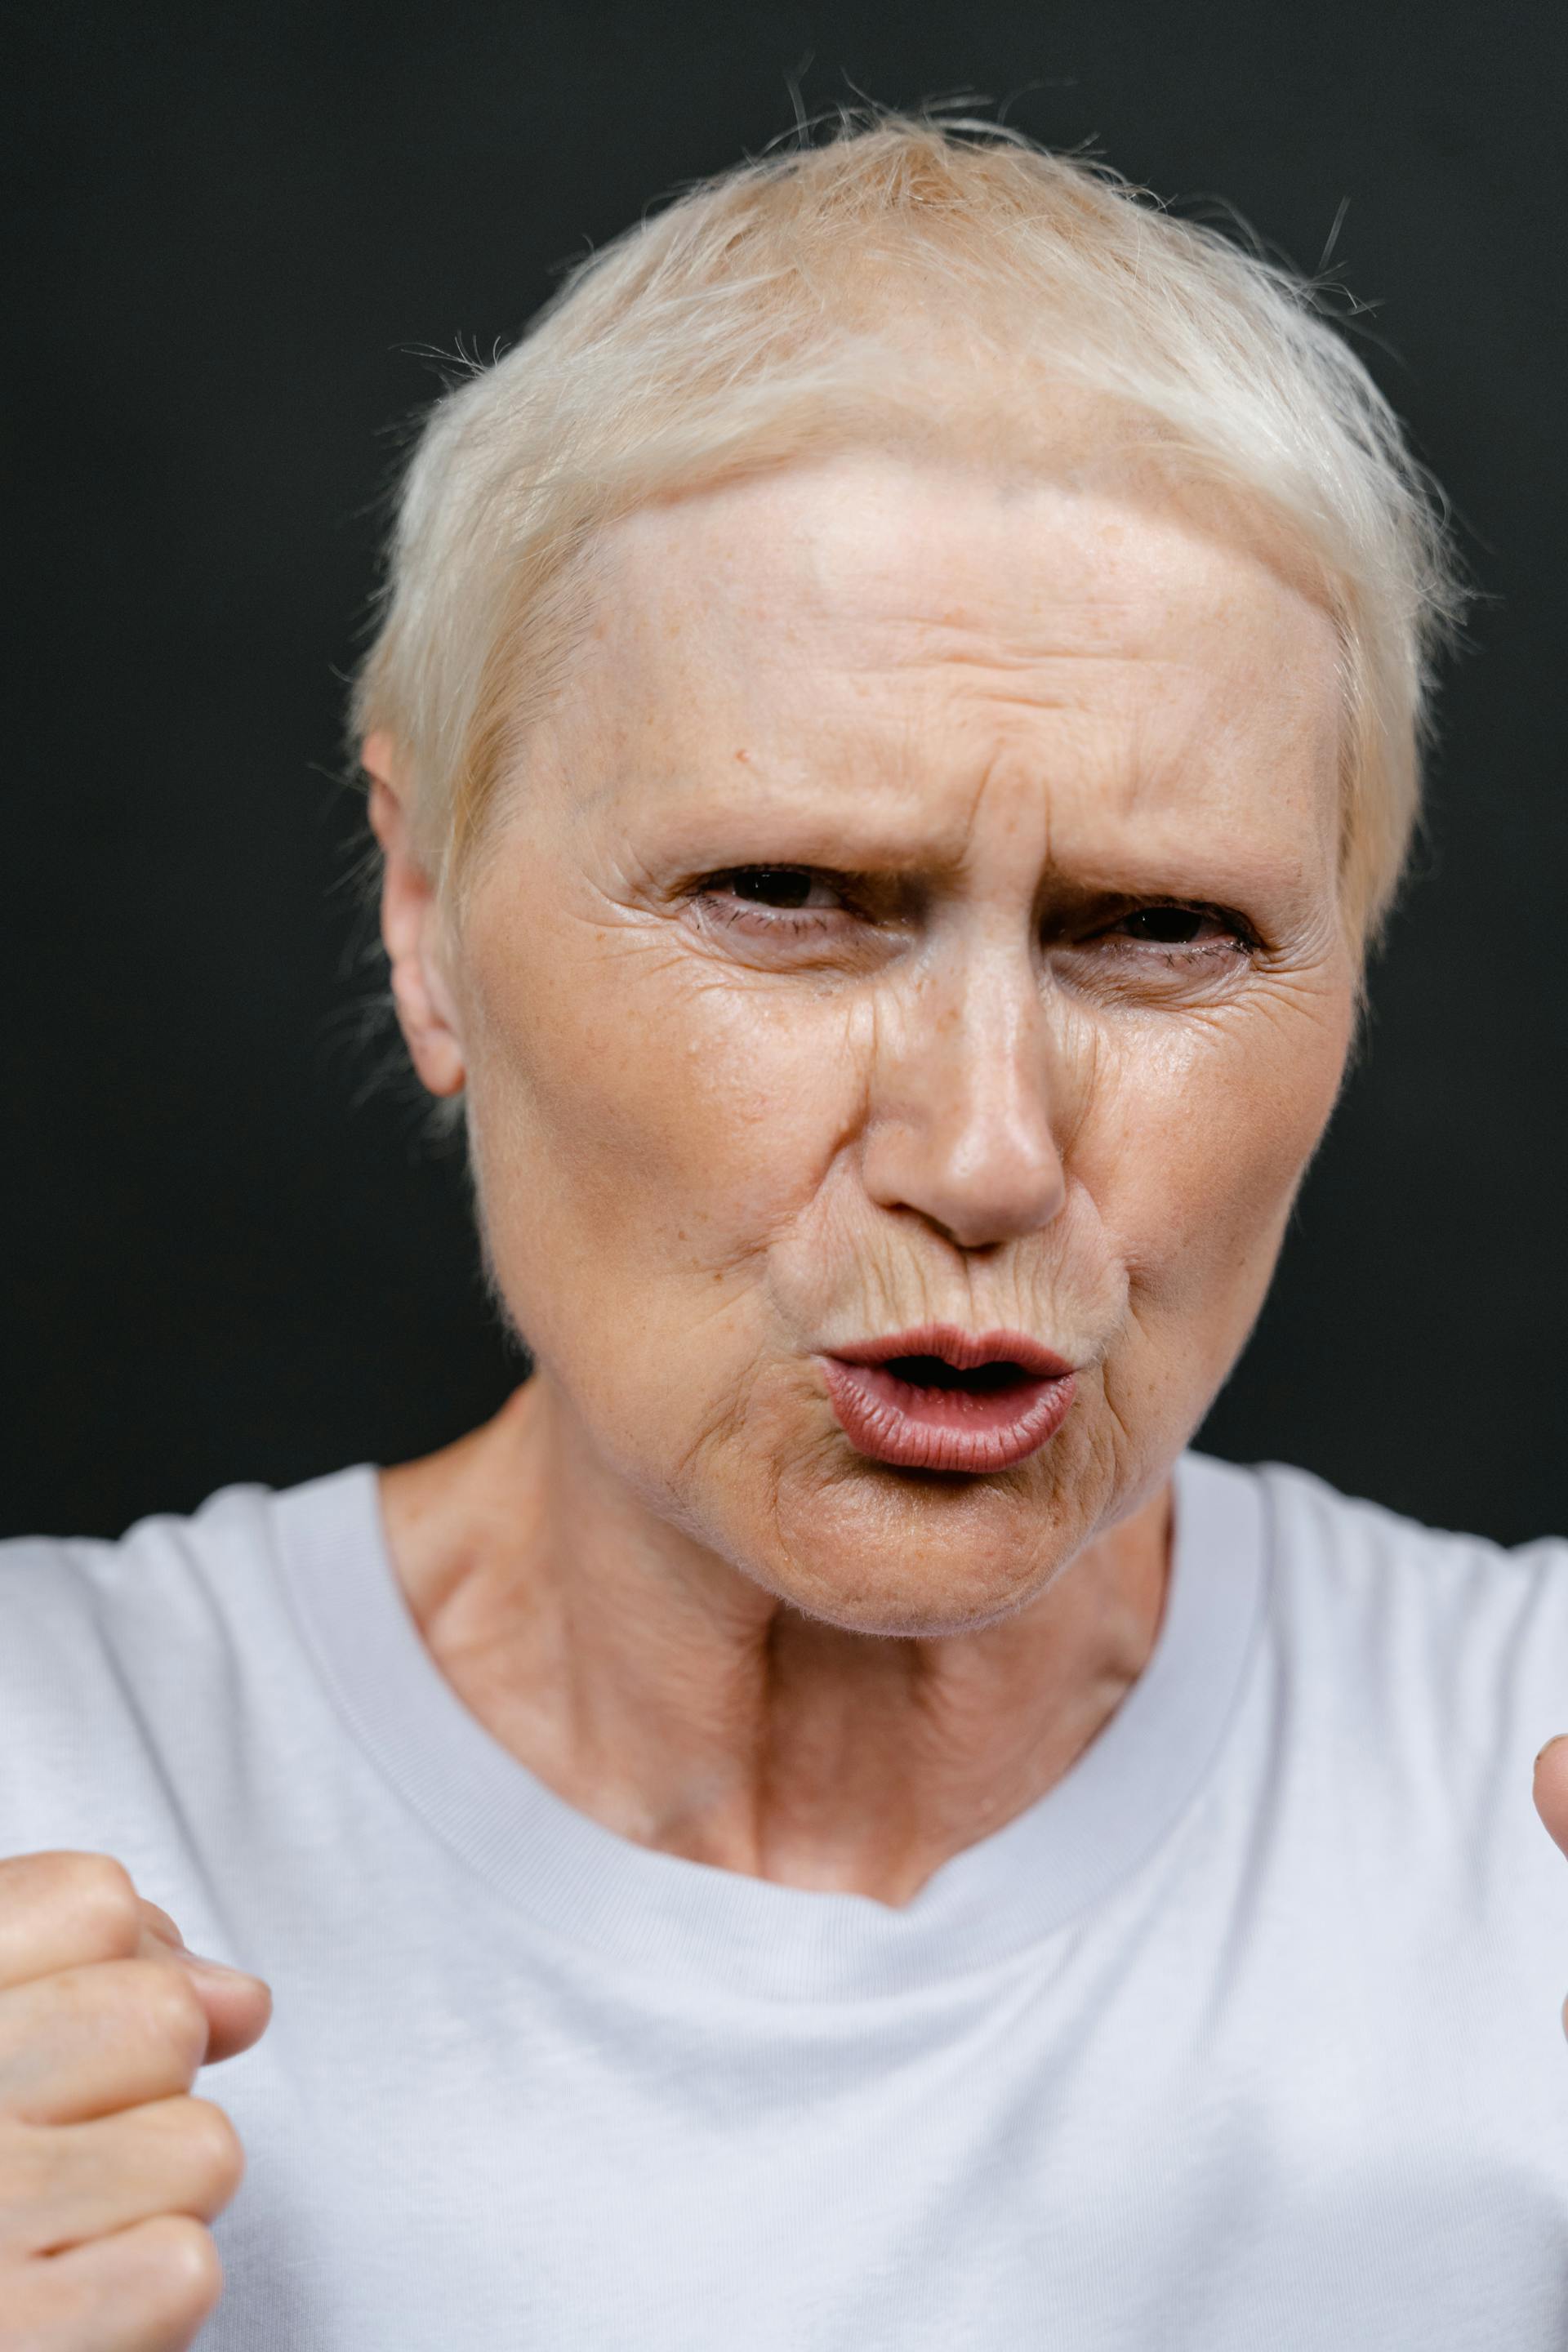 Angry elderly woman | Source: Pexels